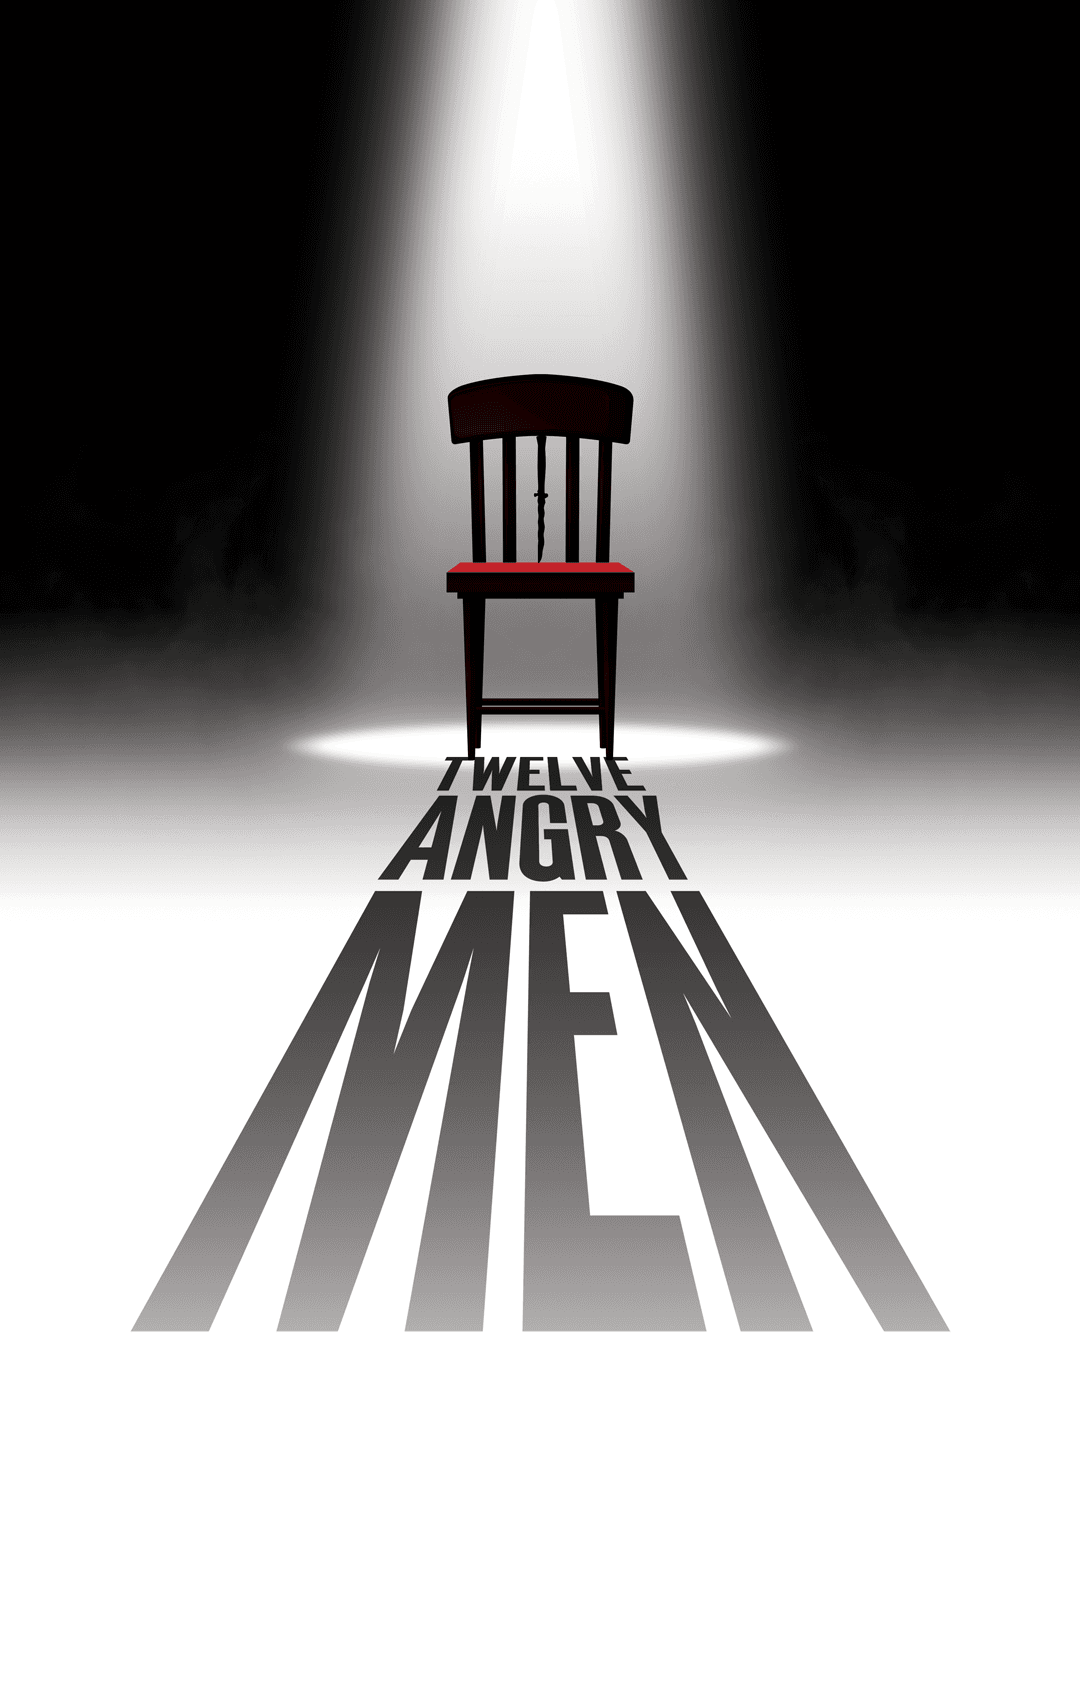 Twelve Angry Men
Wed Dec 7, 7:30 PM - Sat Dec 24, 9:30 PM
in 48 days